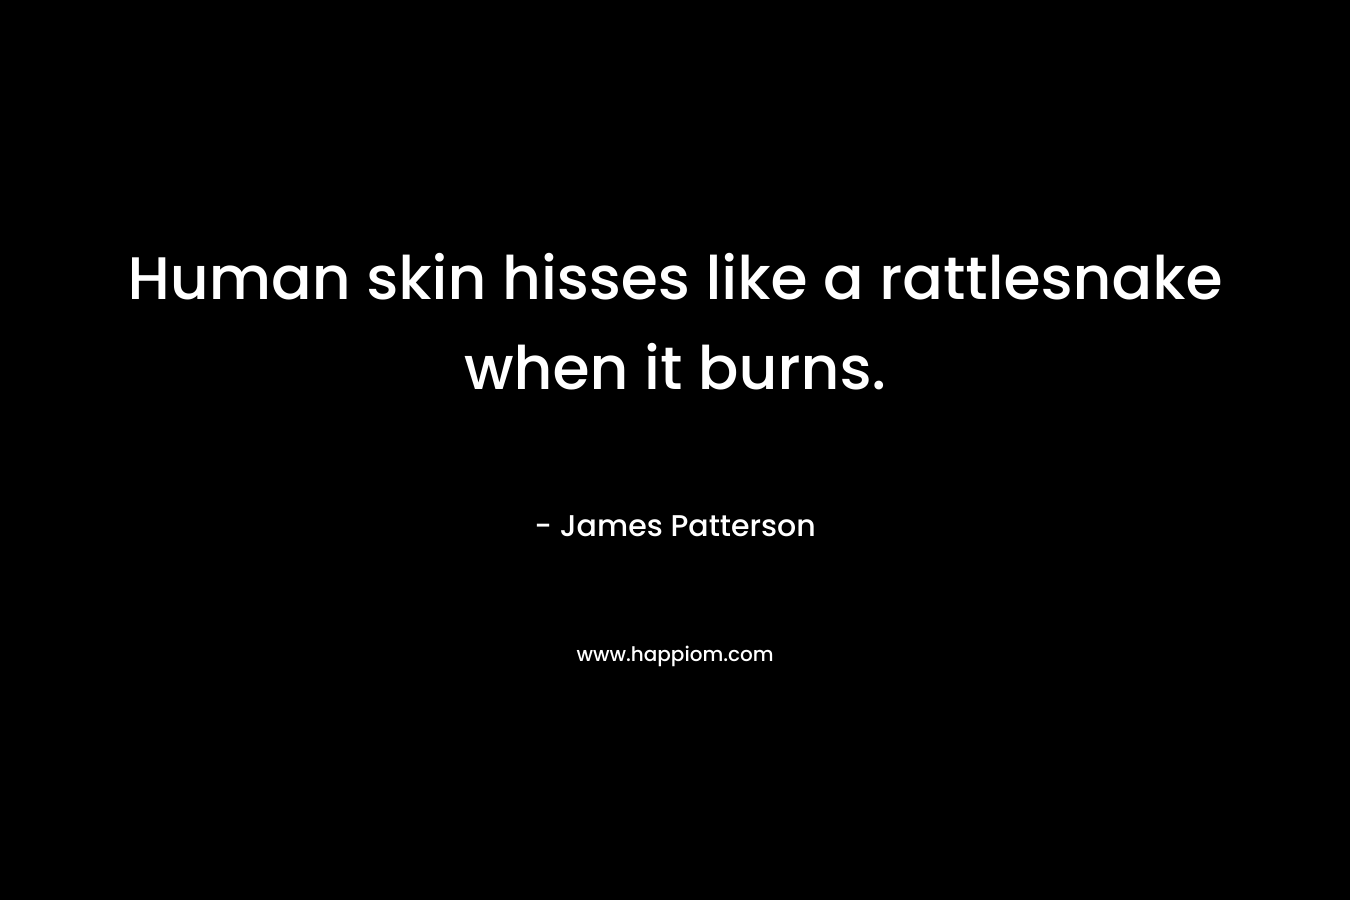 Human skin hisses like a rattlesnake when it burns. – James Patterson